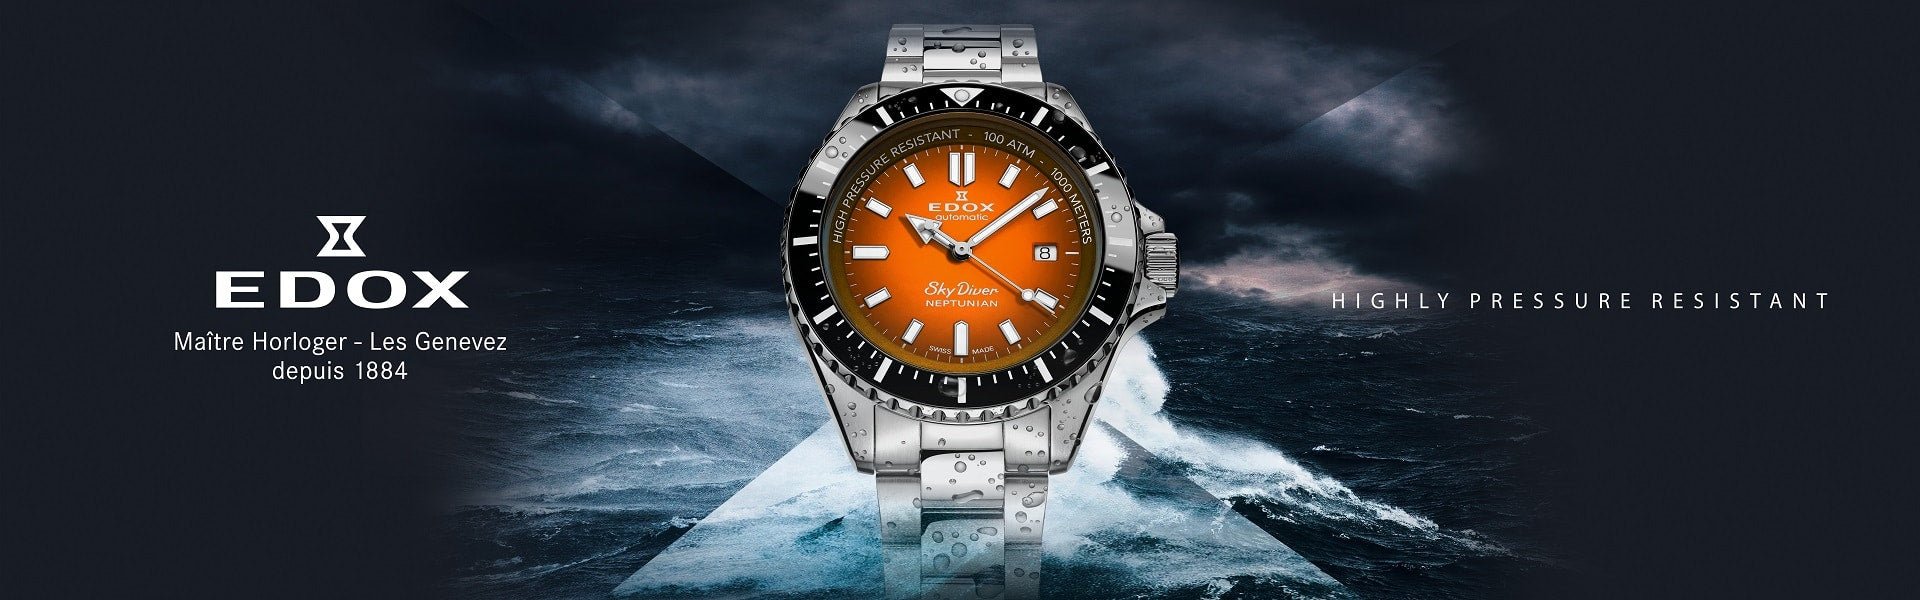 Neptunian - High Pressure Resistant - Edox Watches